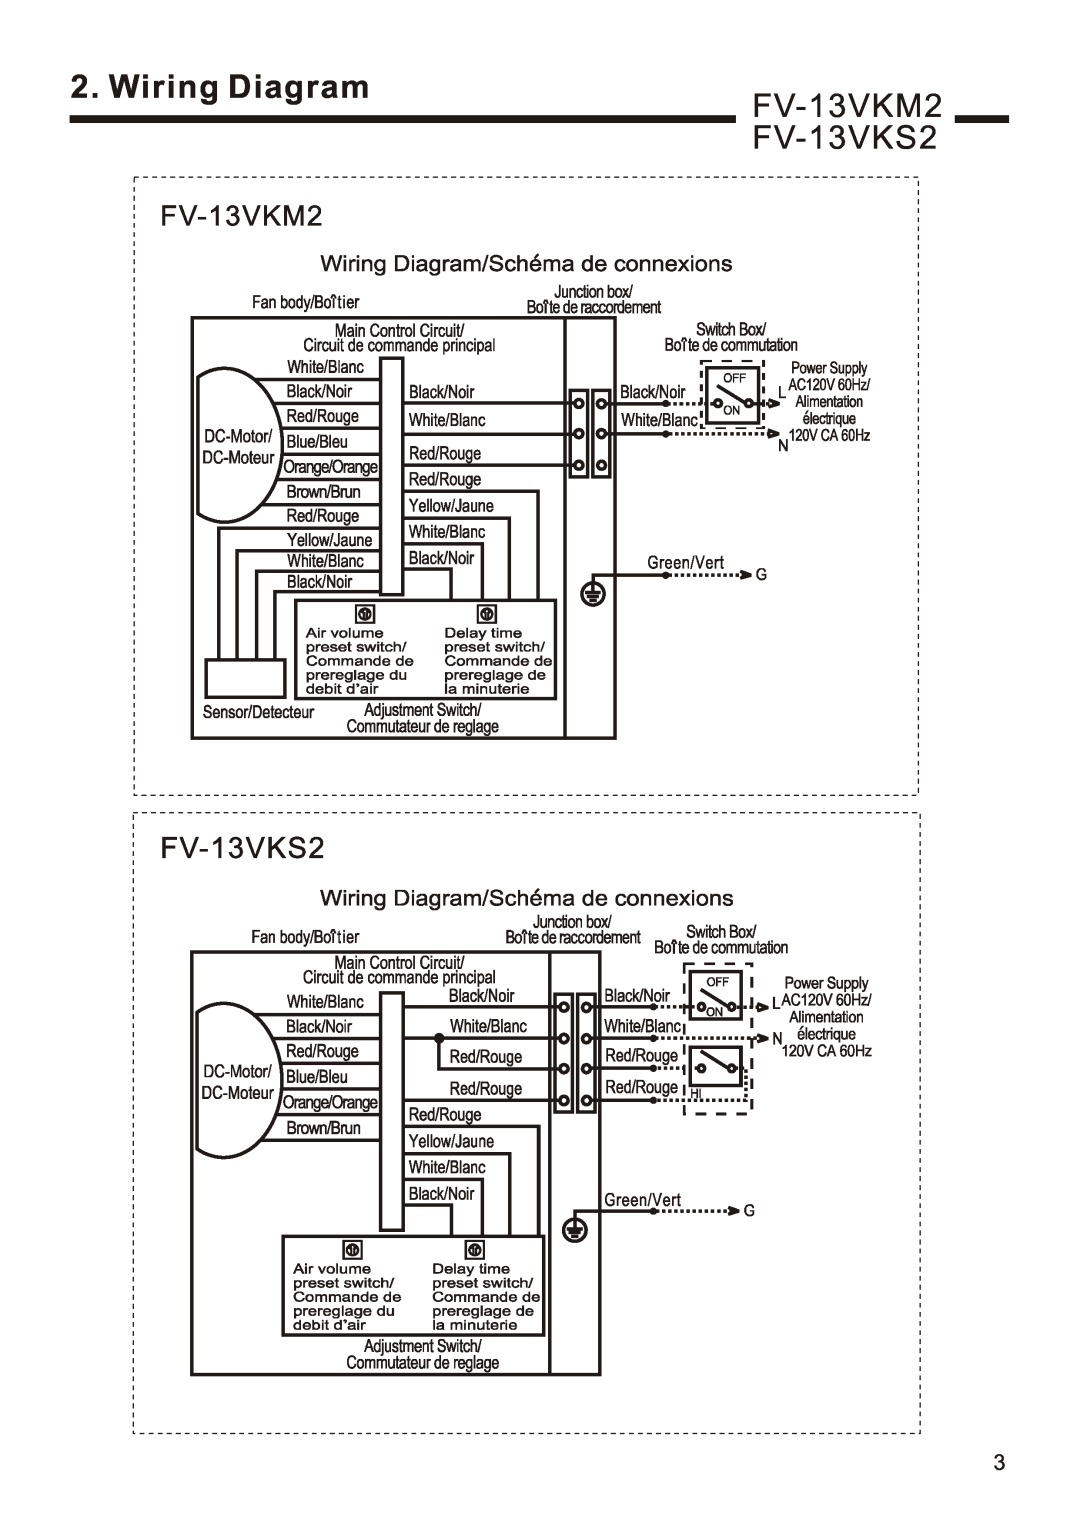 Panasonic service manual Wiring Diagram, FV-13VKM2 FV-13VKS2 